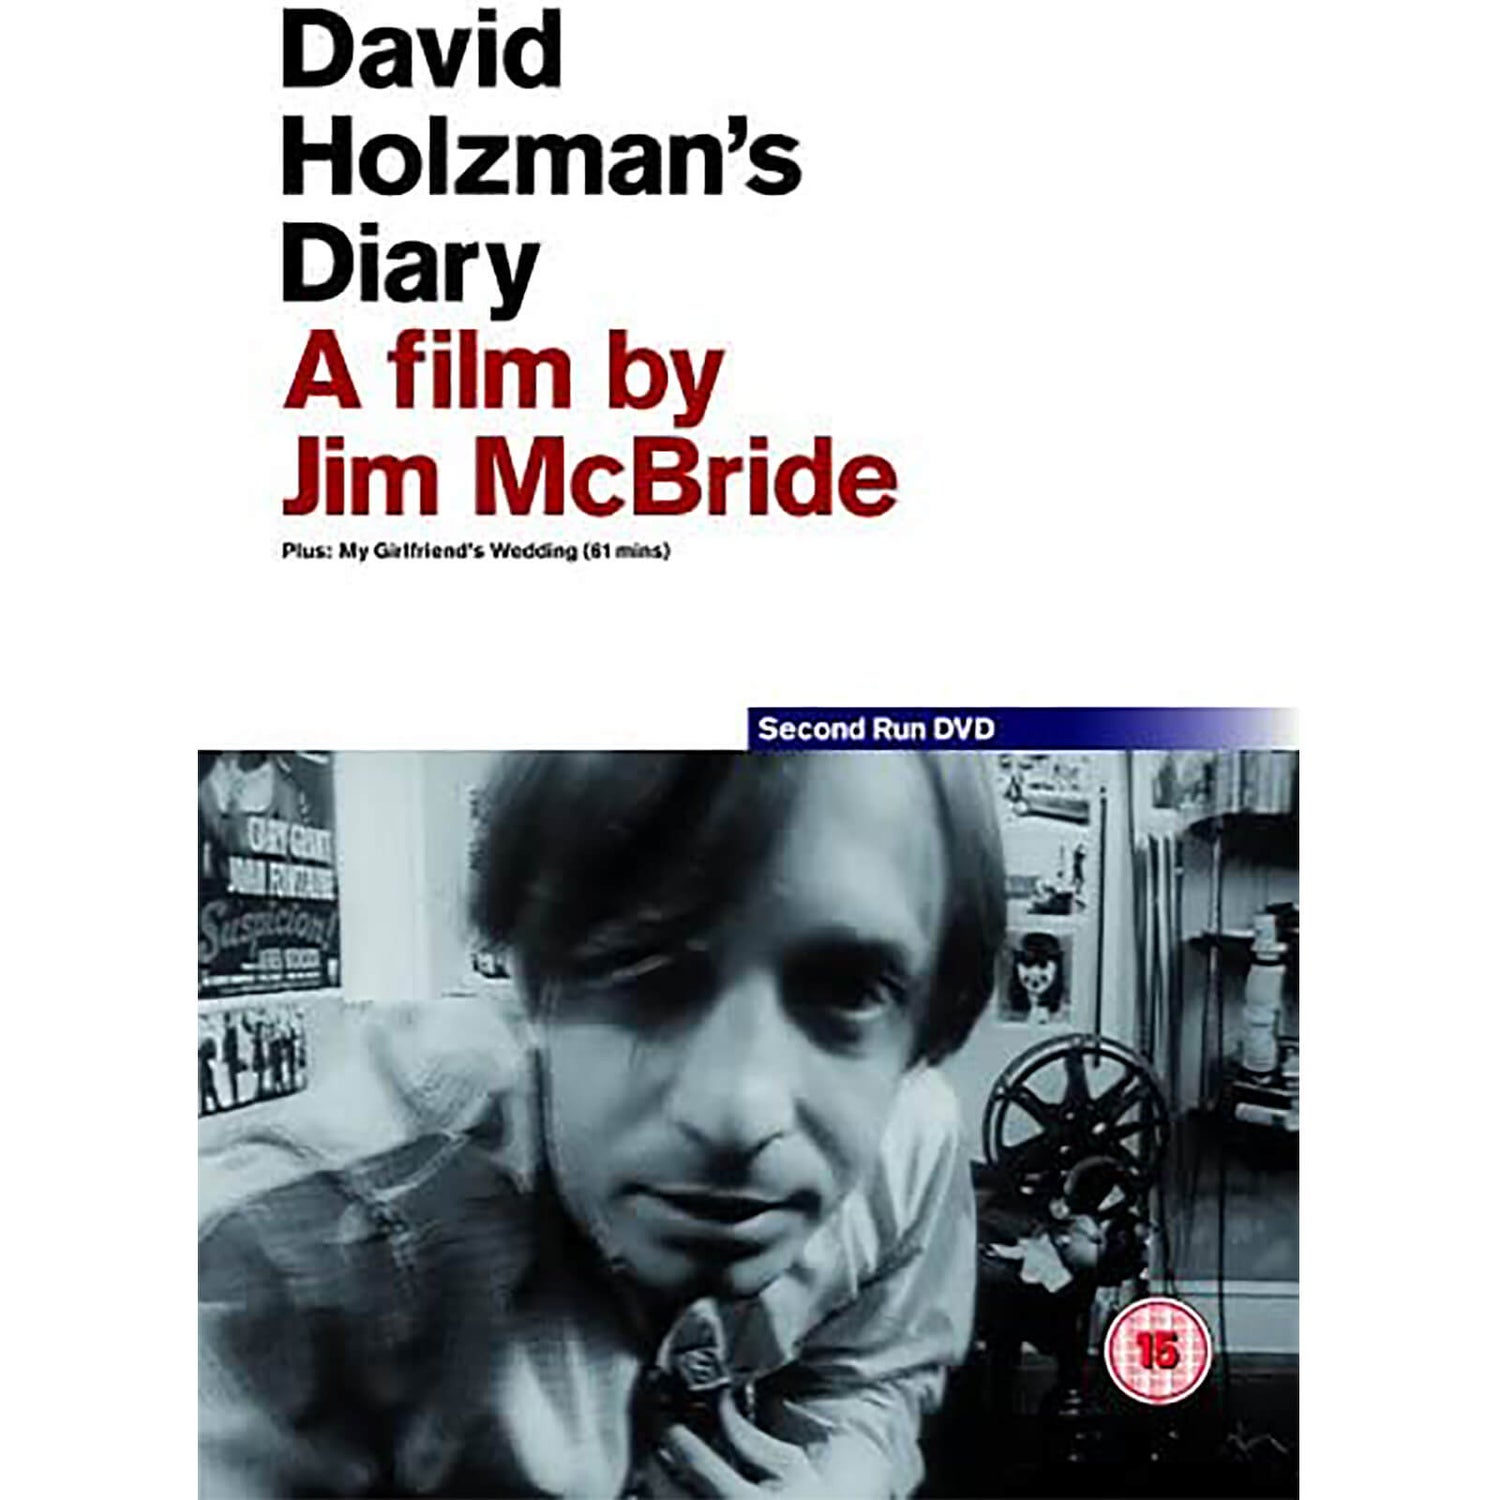 David Holzmans Diary & My Girlfriend's Wedding DVD